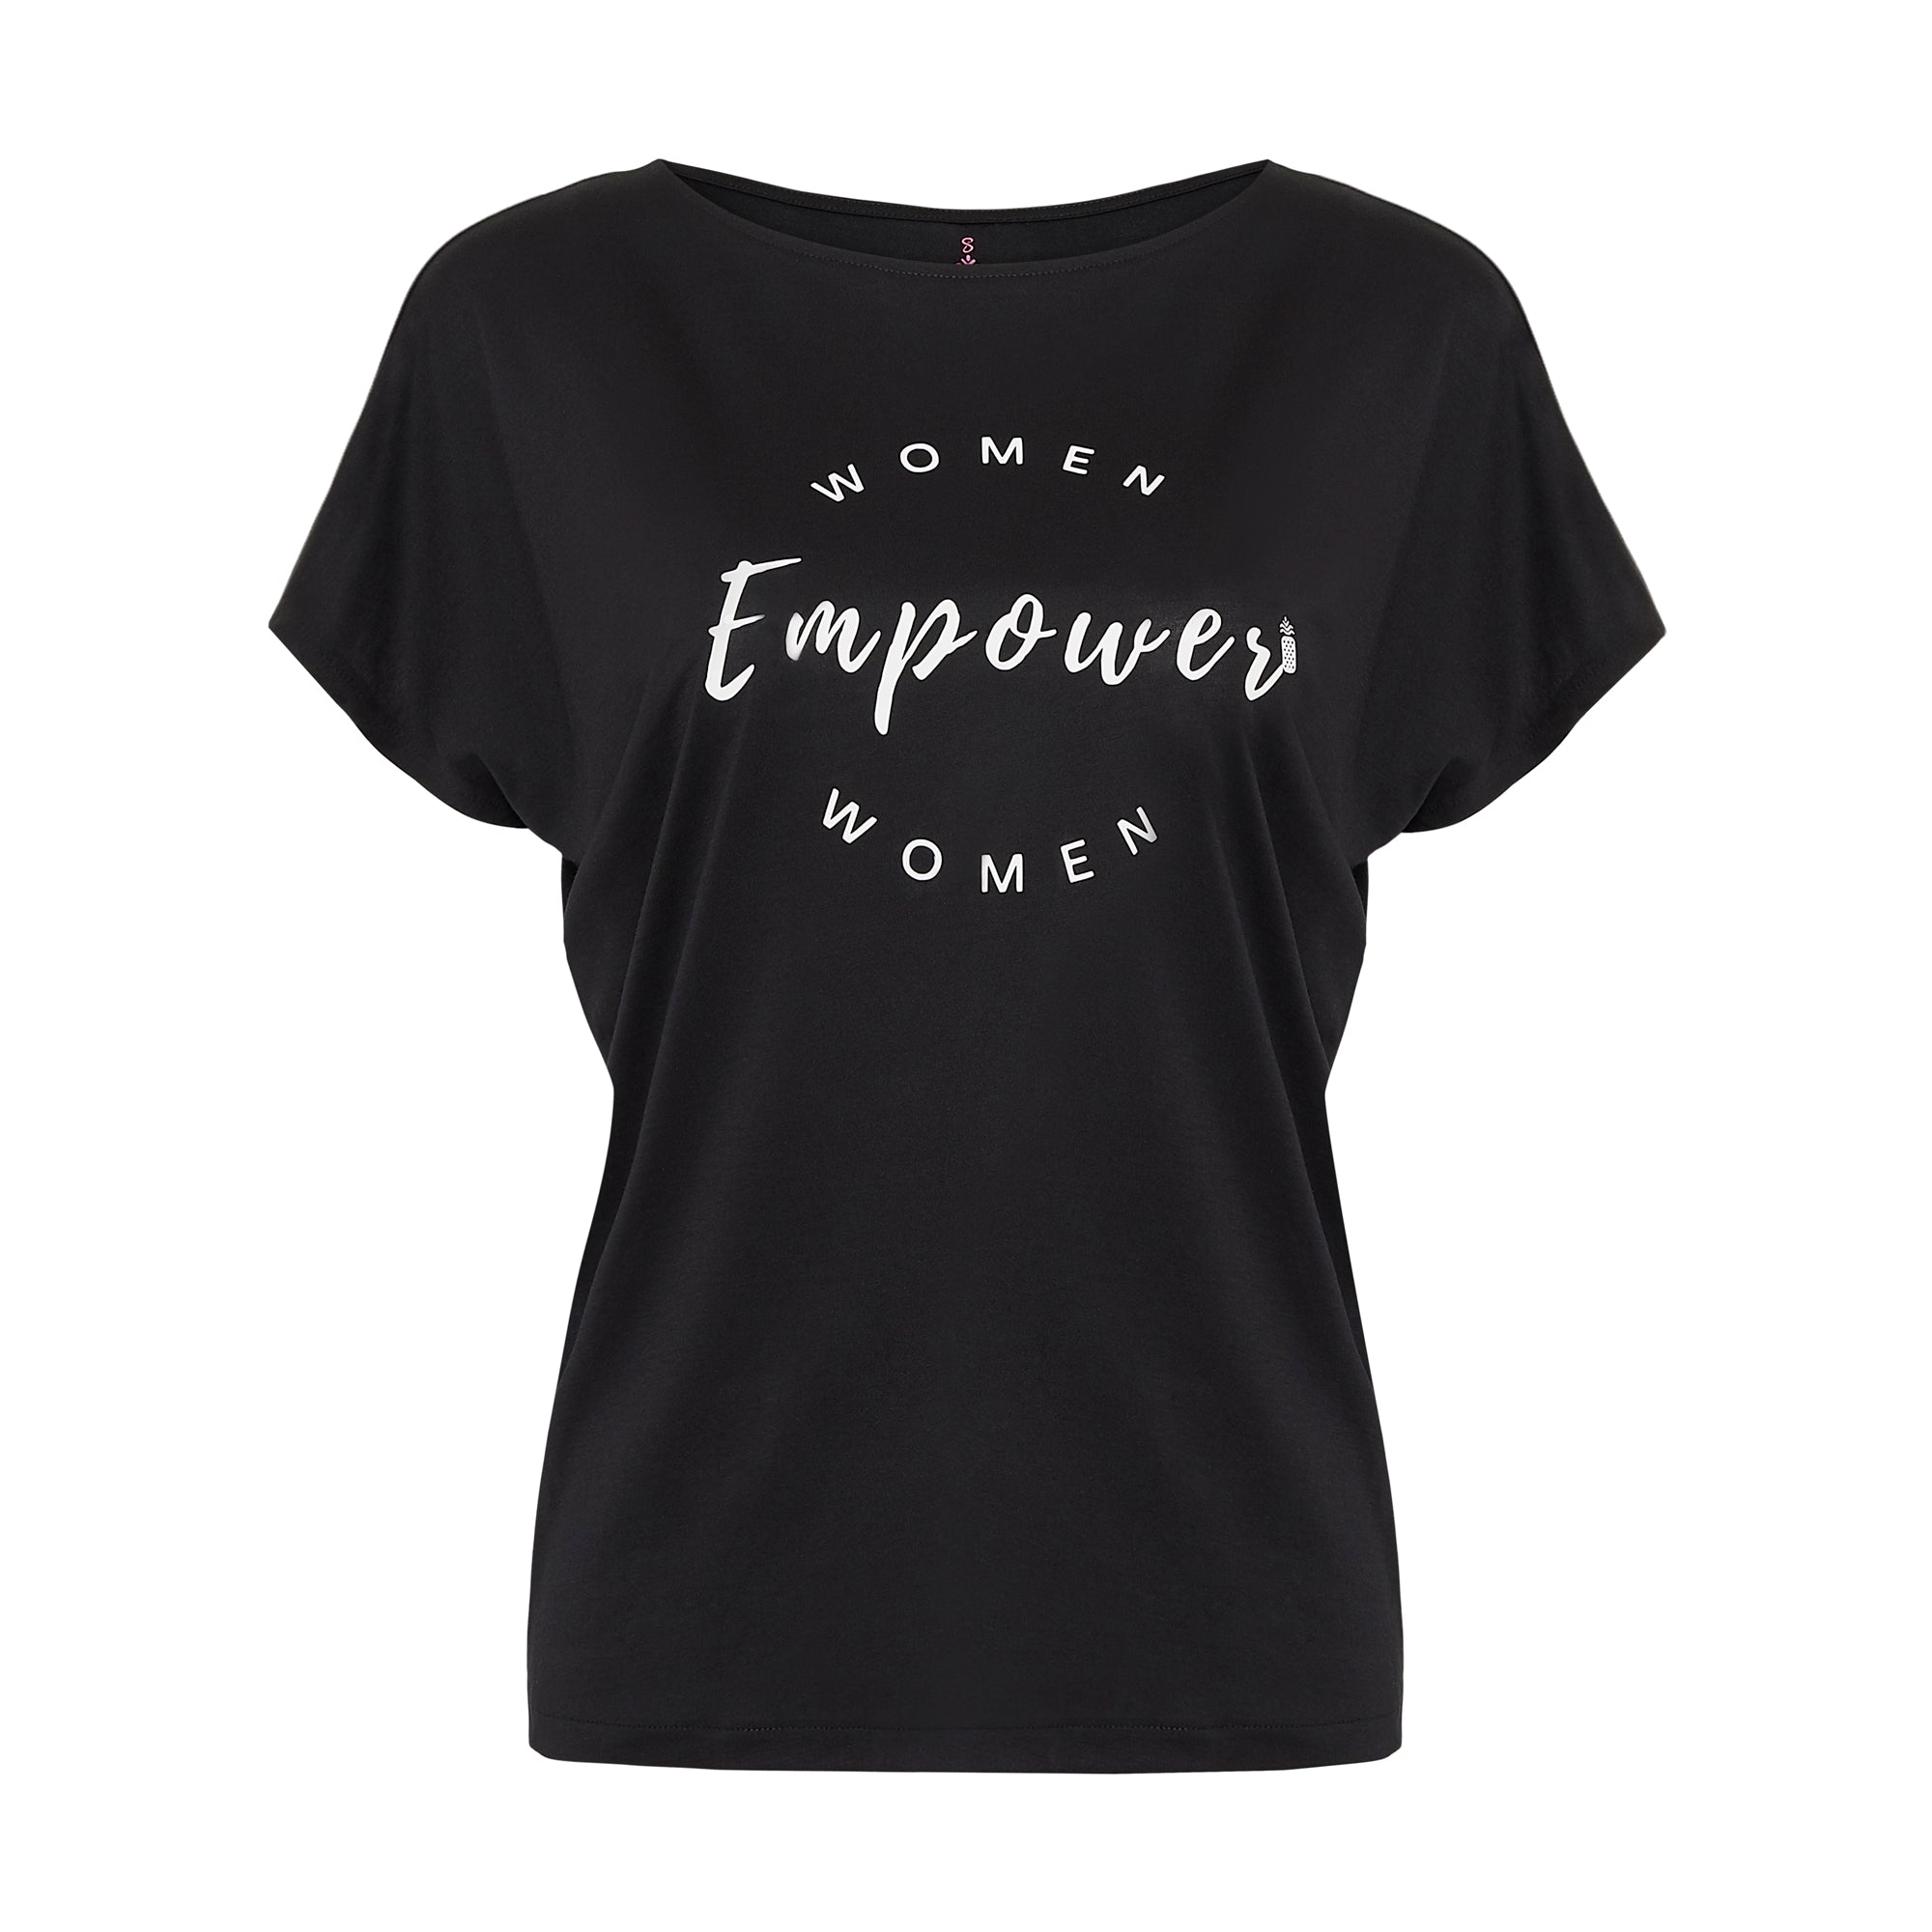 Women Empower t-shirt Black